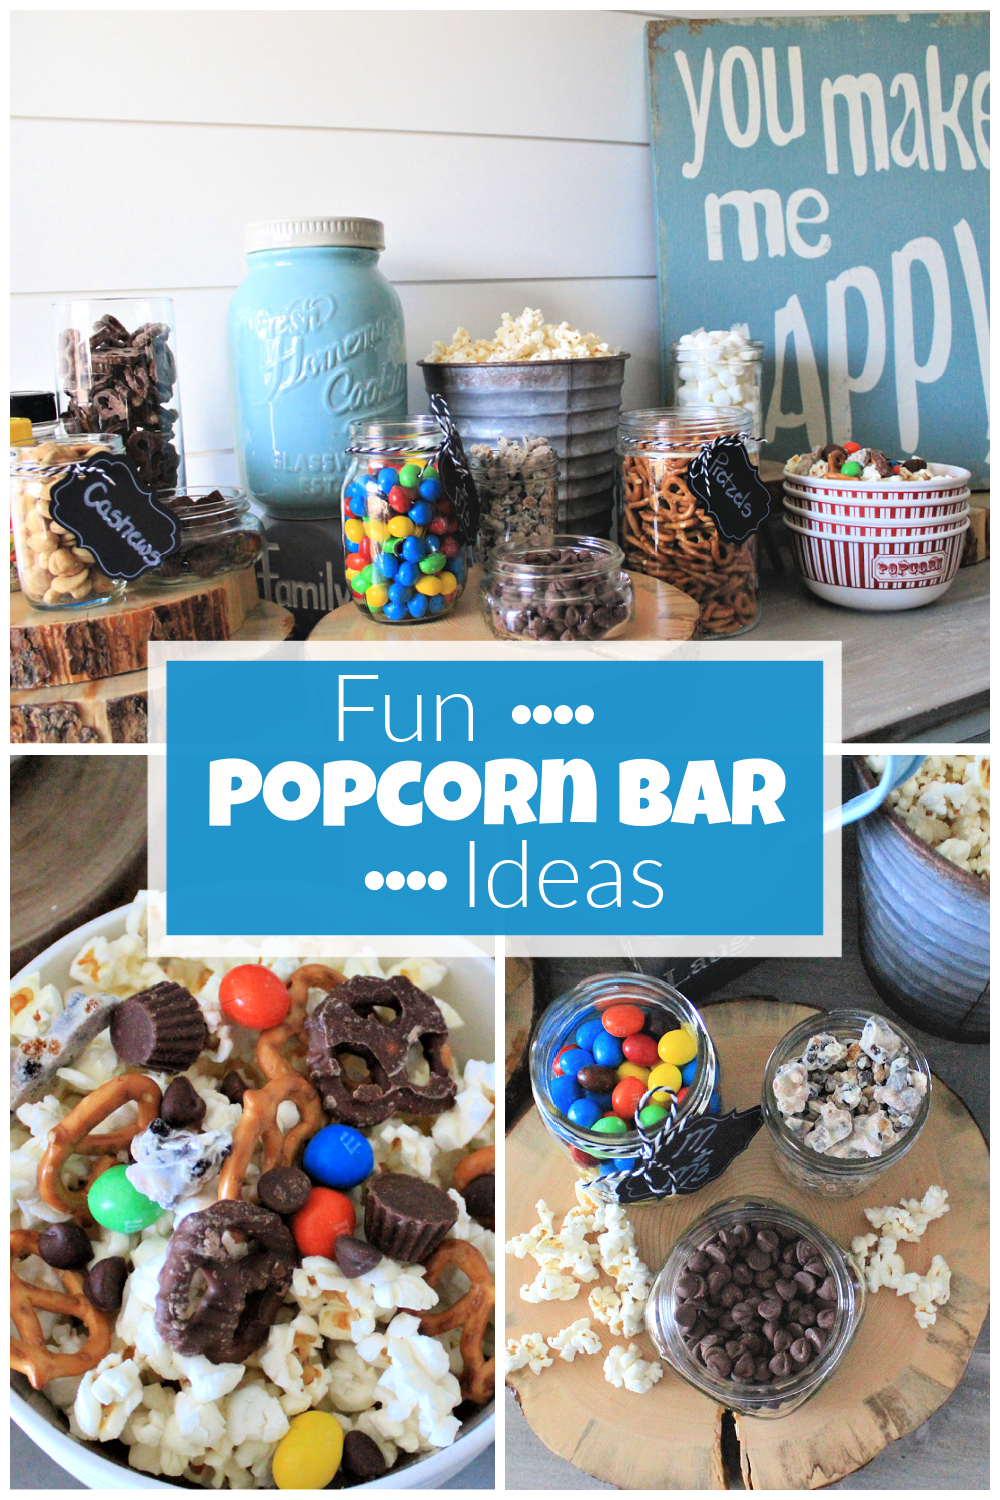 DIY Popcorn Bar! This fun and simple popcorn bar is super tasty and so simple to put together. Popcorn bars are perfect for any party. #popcornbar #funpopcornbarideas #diypopcornbar